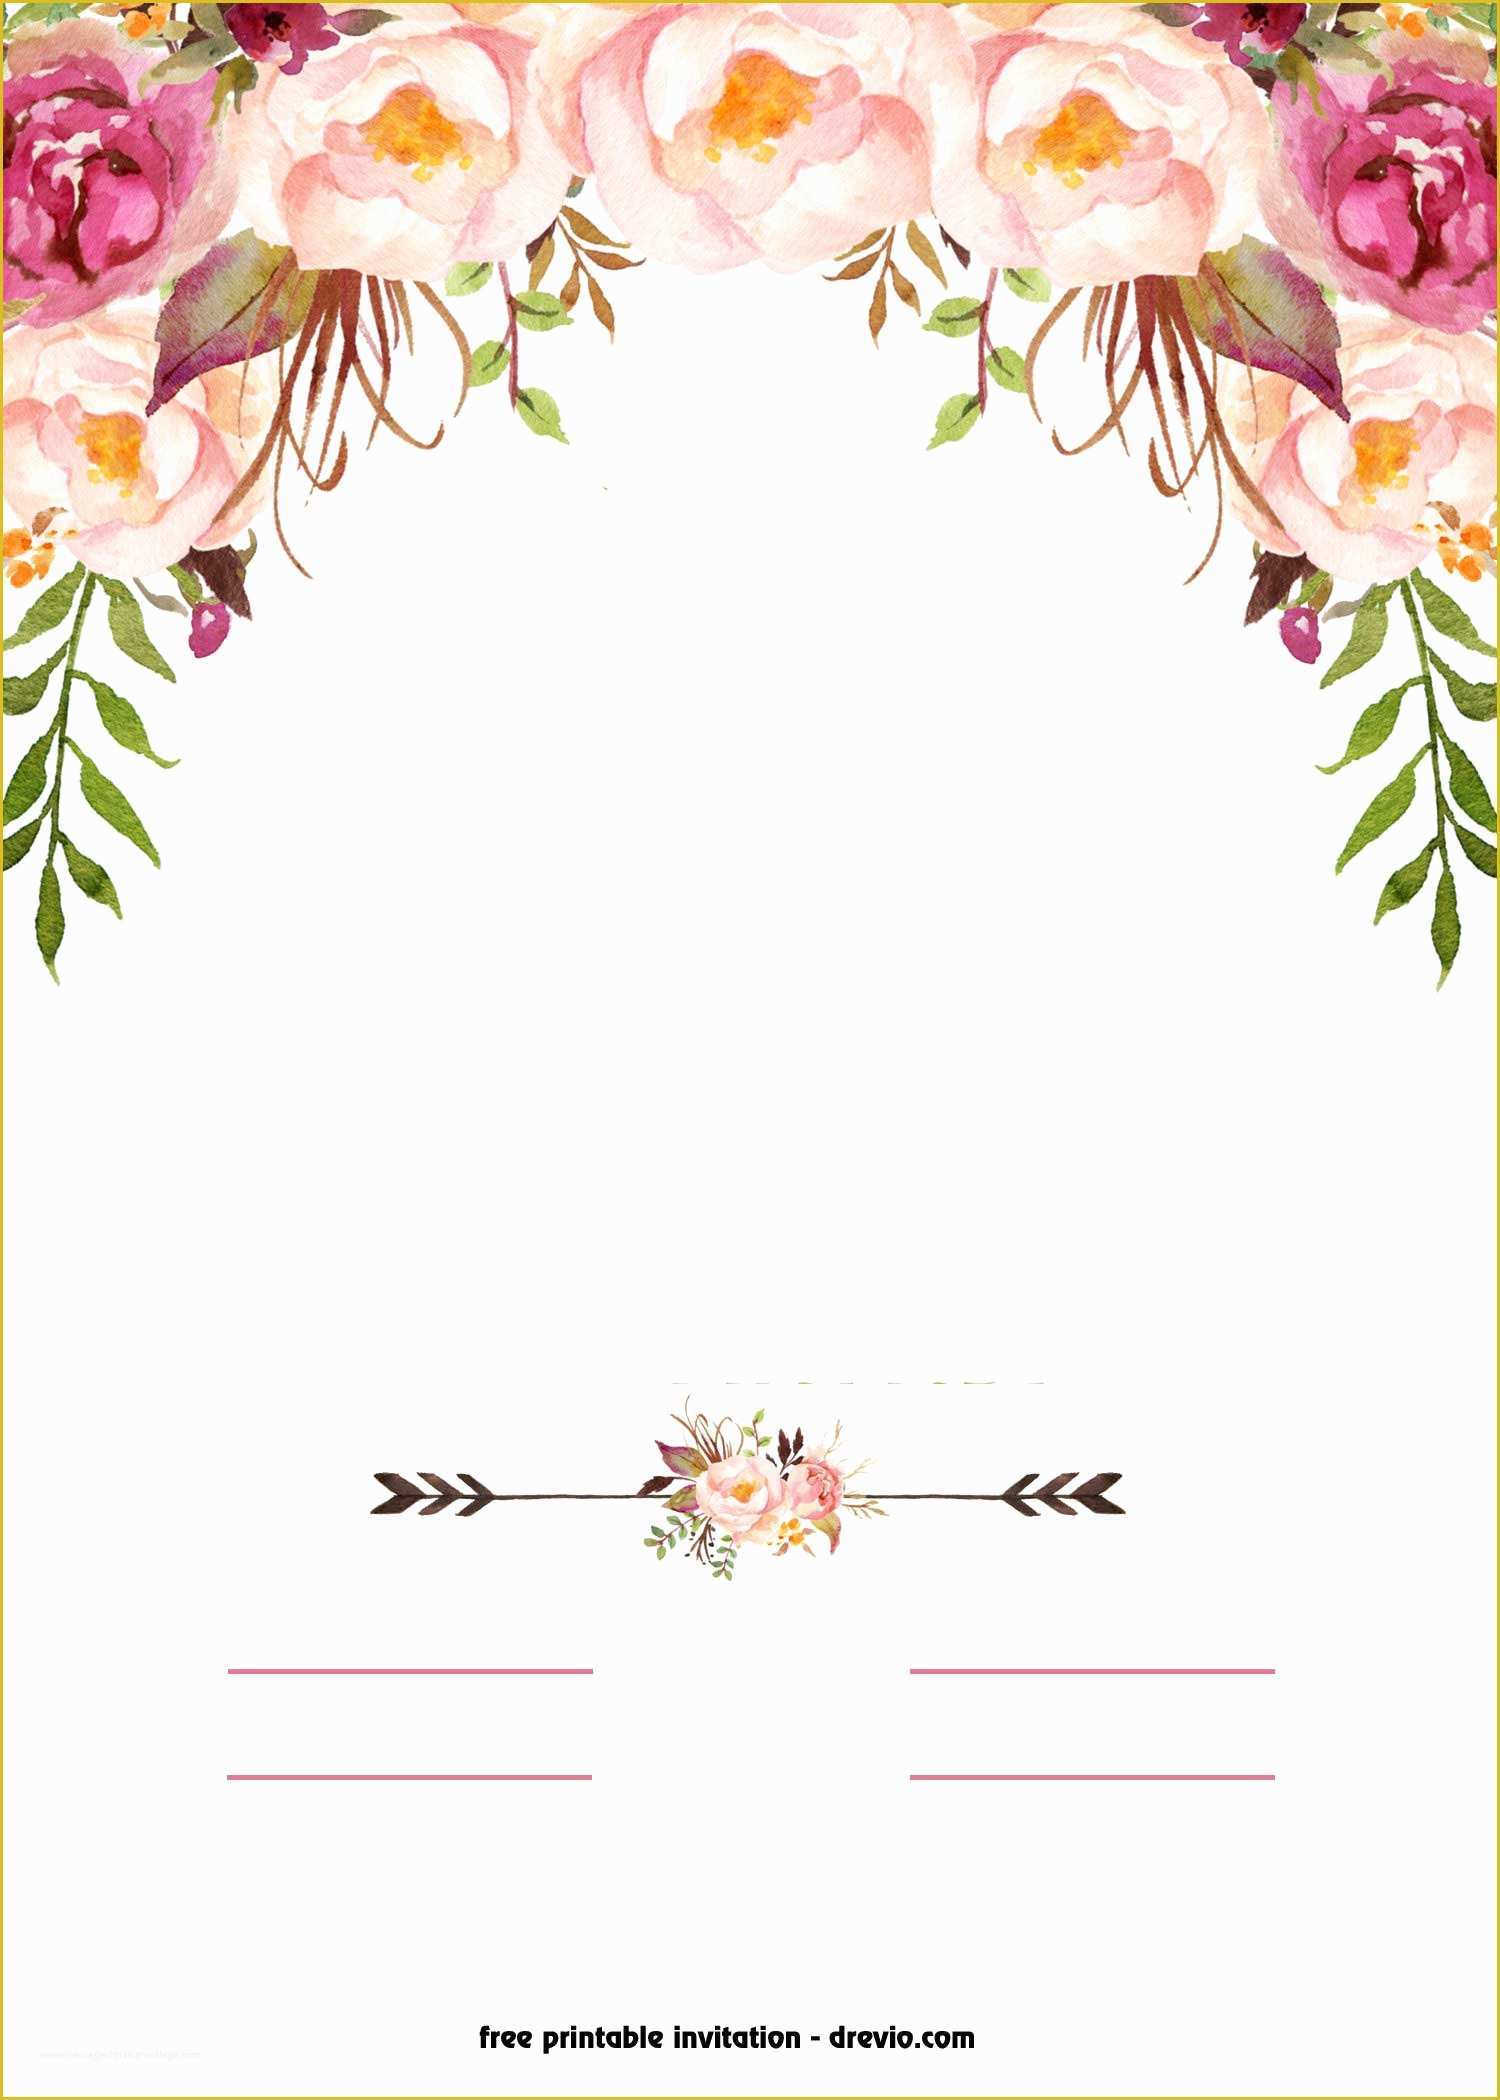 Flower Invitations Templates Free Of Free Printable Boho Chic Flower Baby Shower Invitation